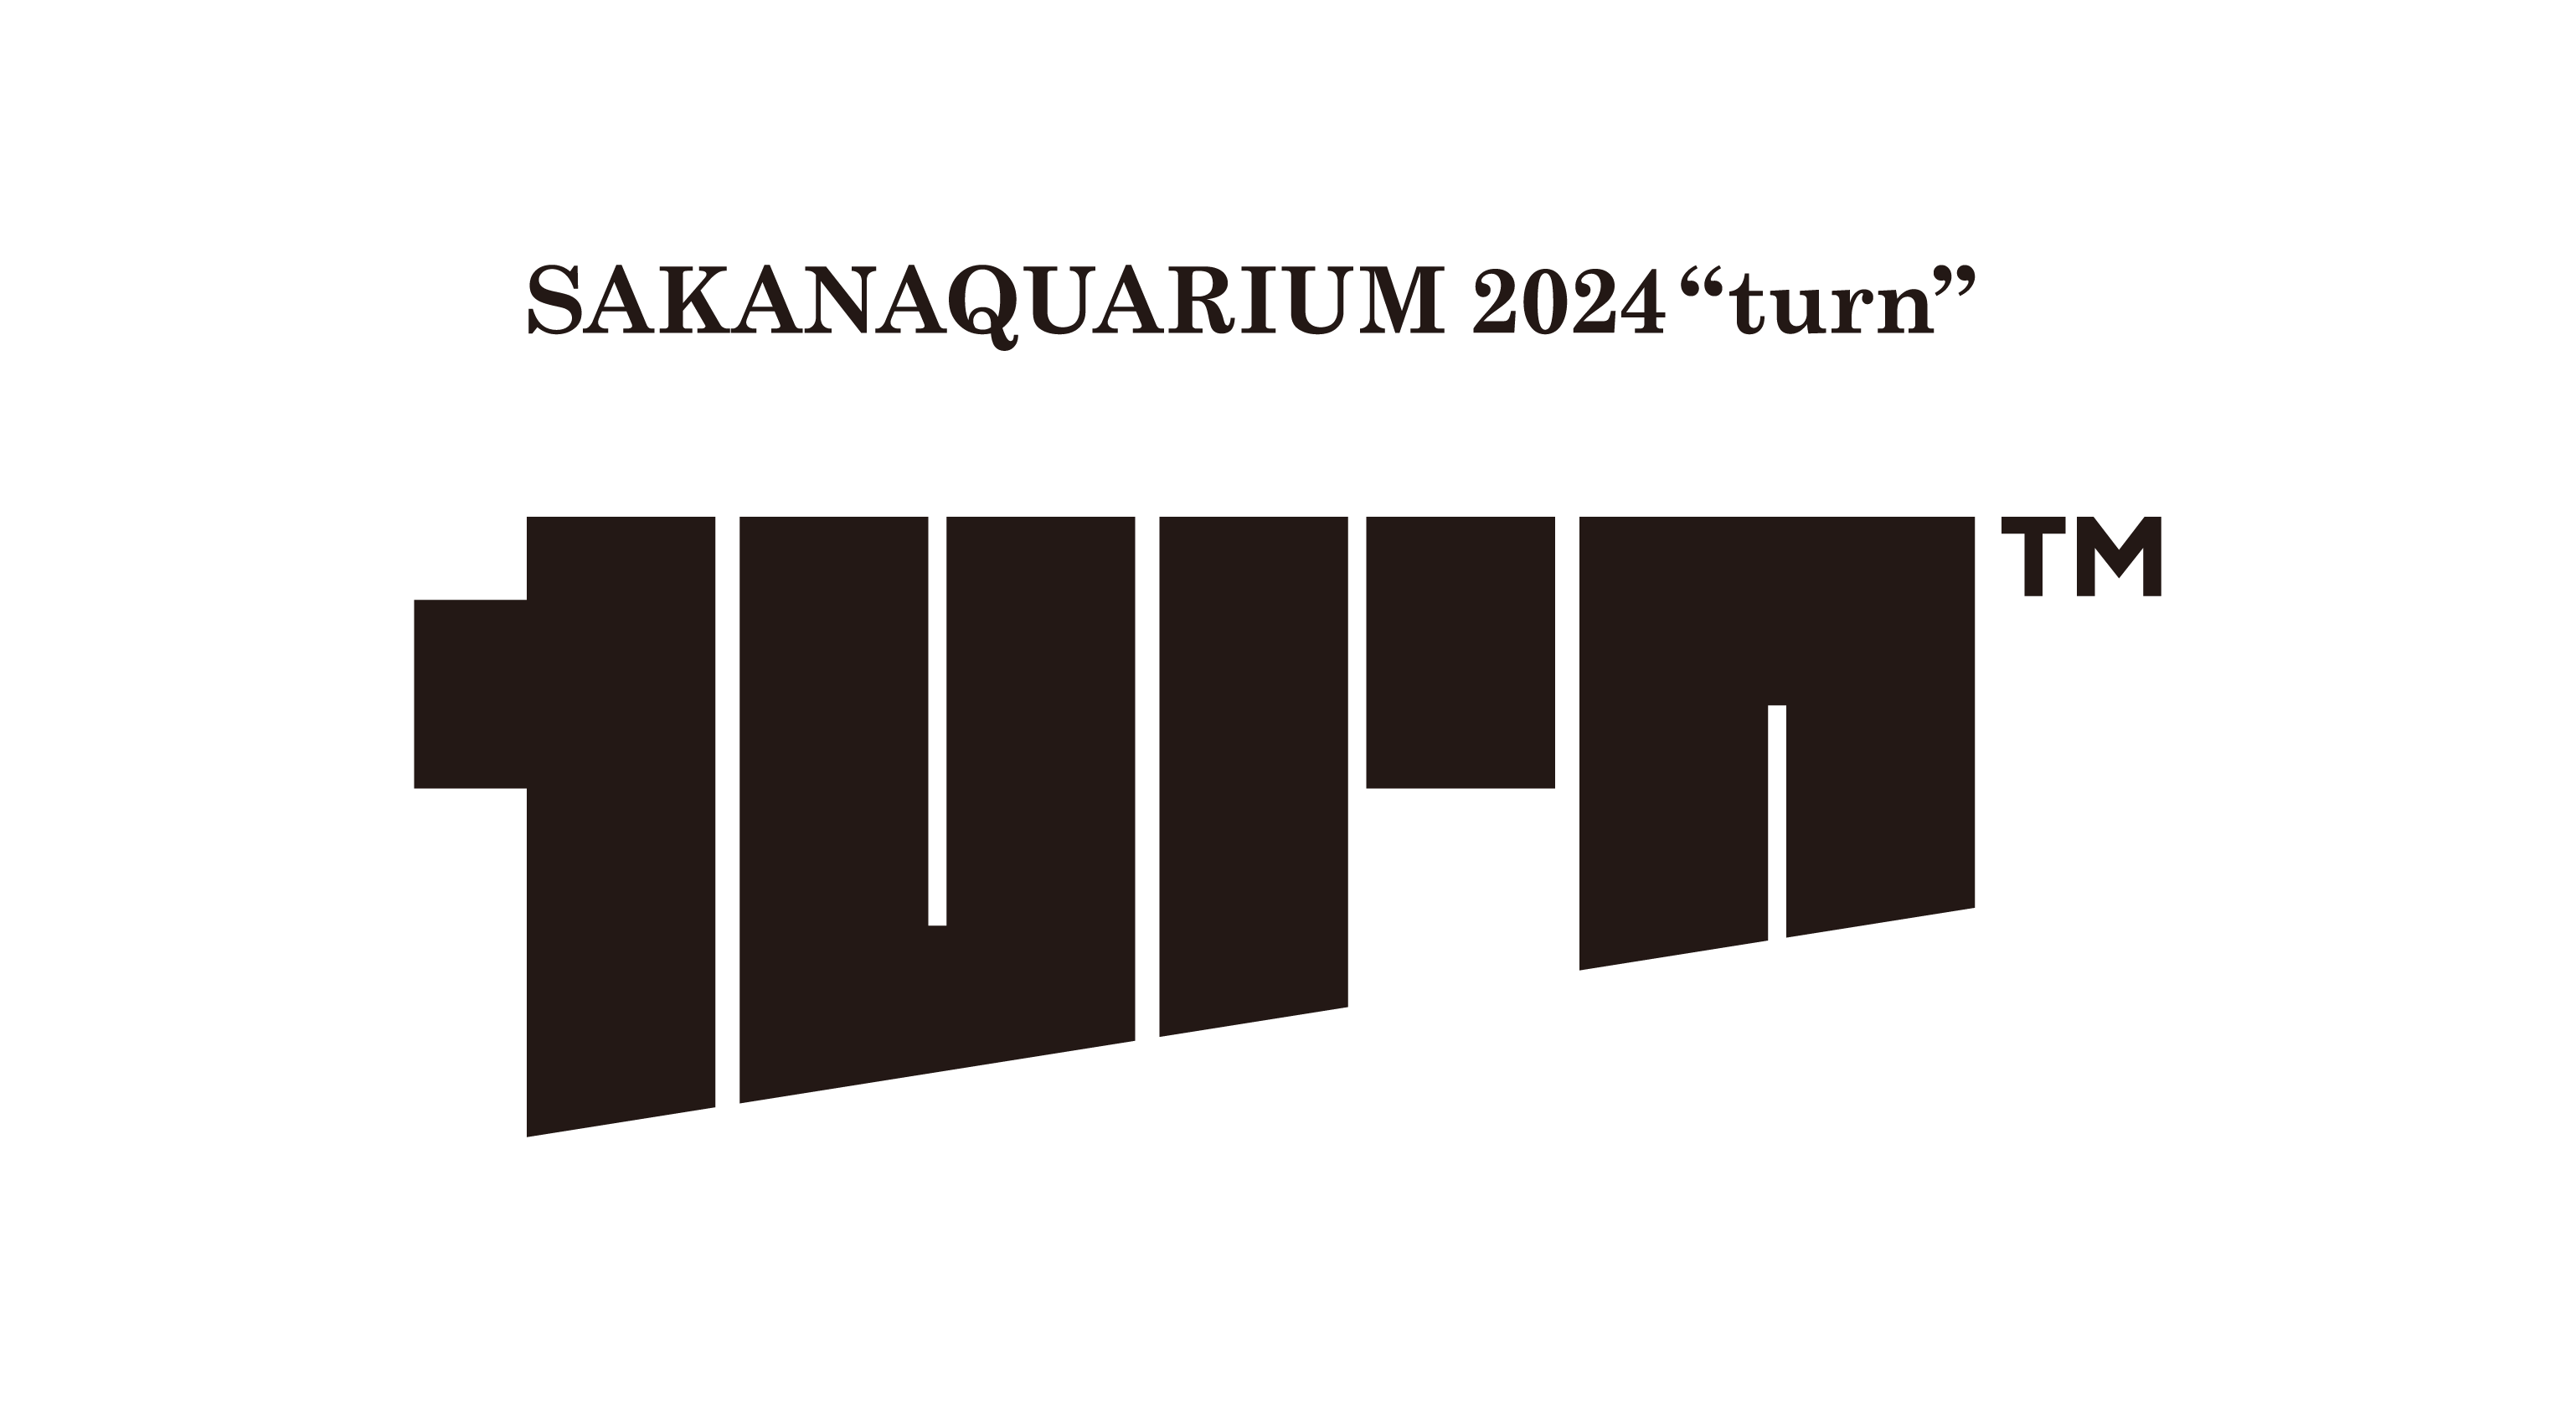 「SAKANAQUARIUM 2024 “turn”」チケット購入者向け会場保育サービスのご案内